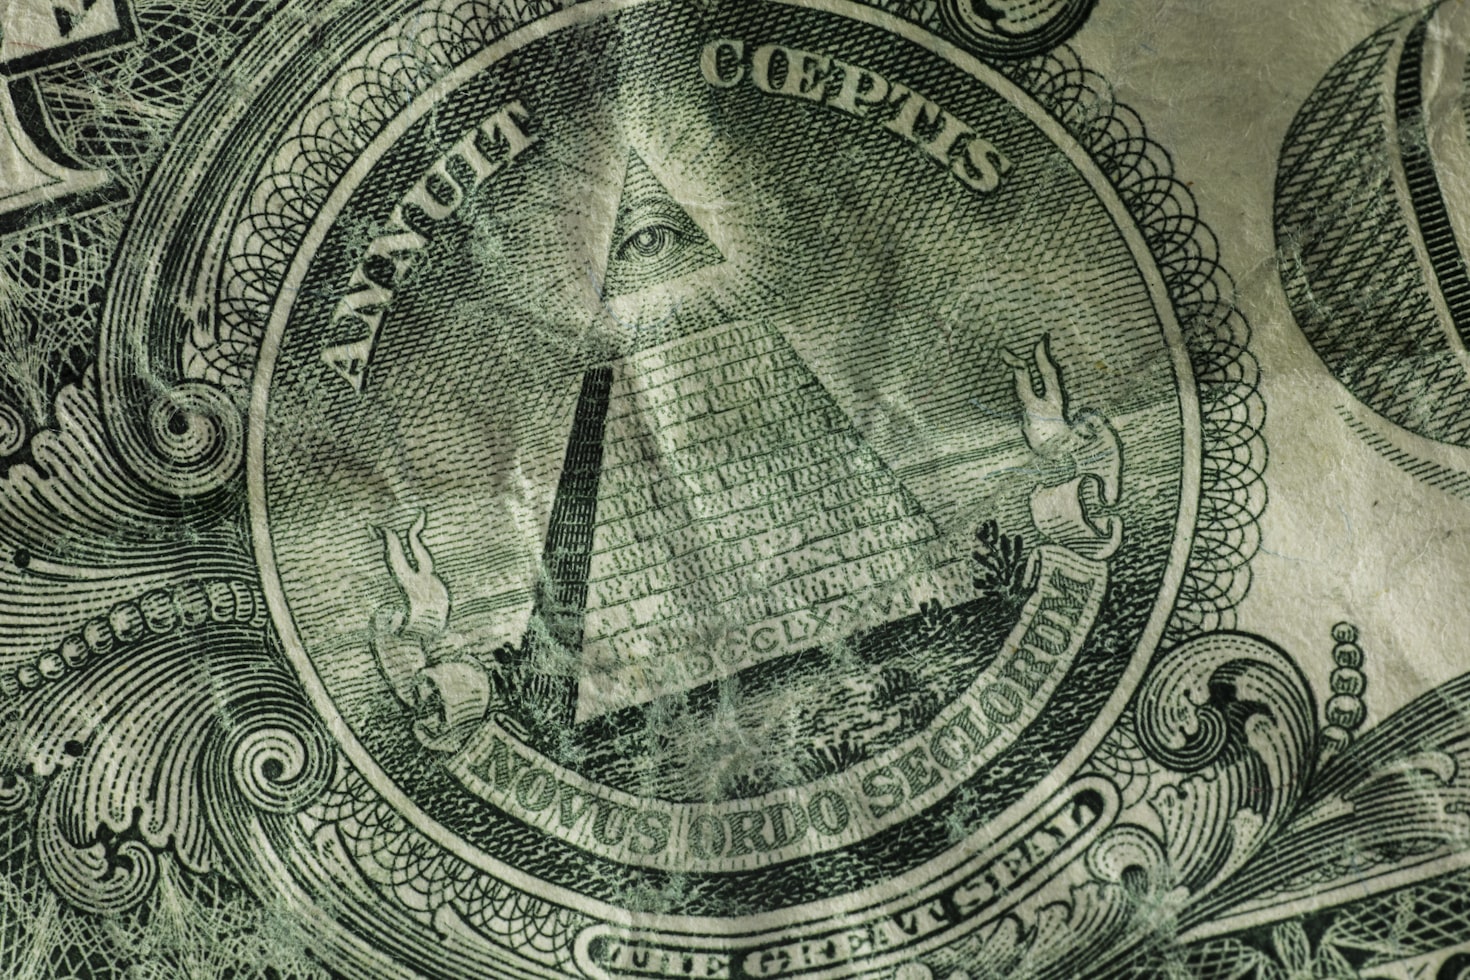 Illuminati the secret society